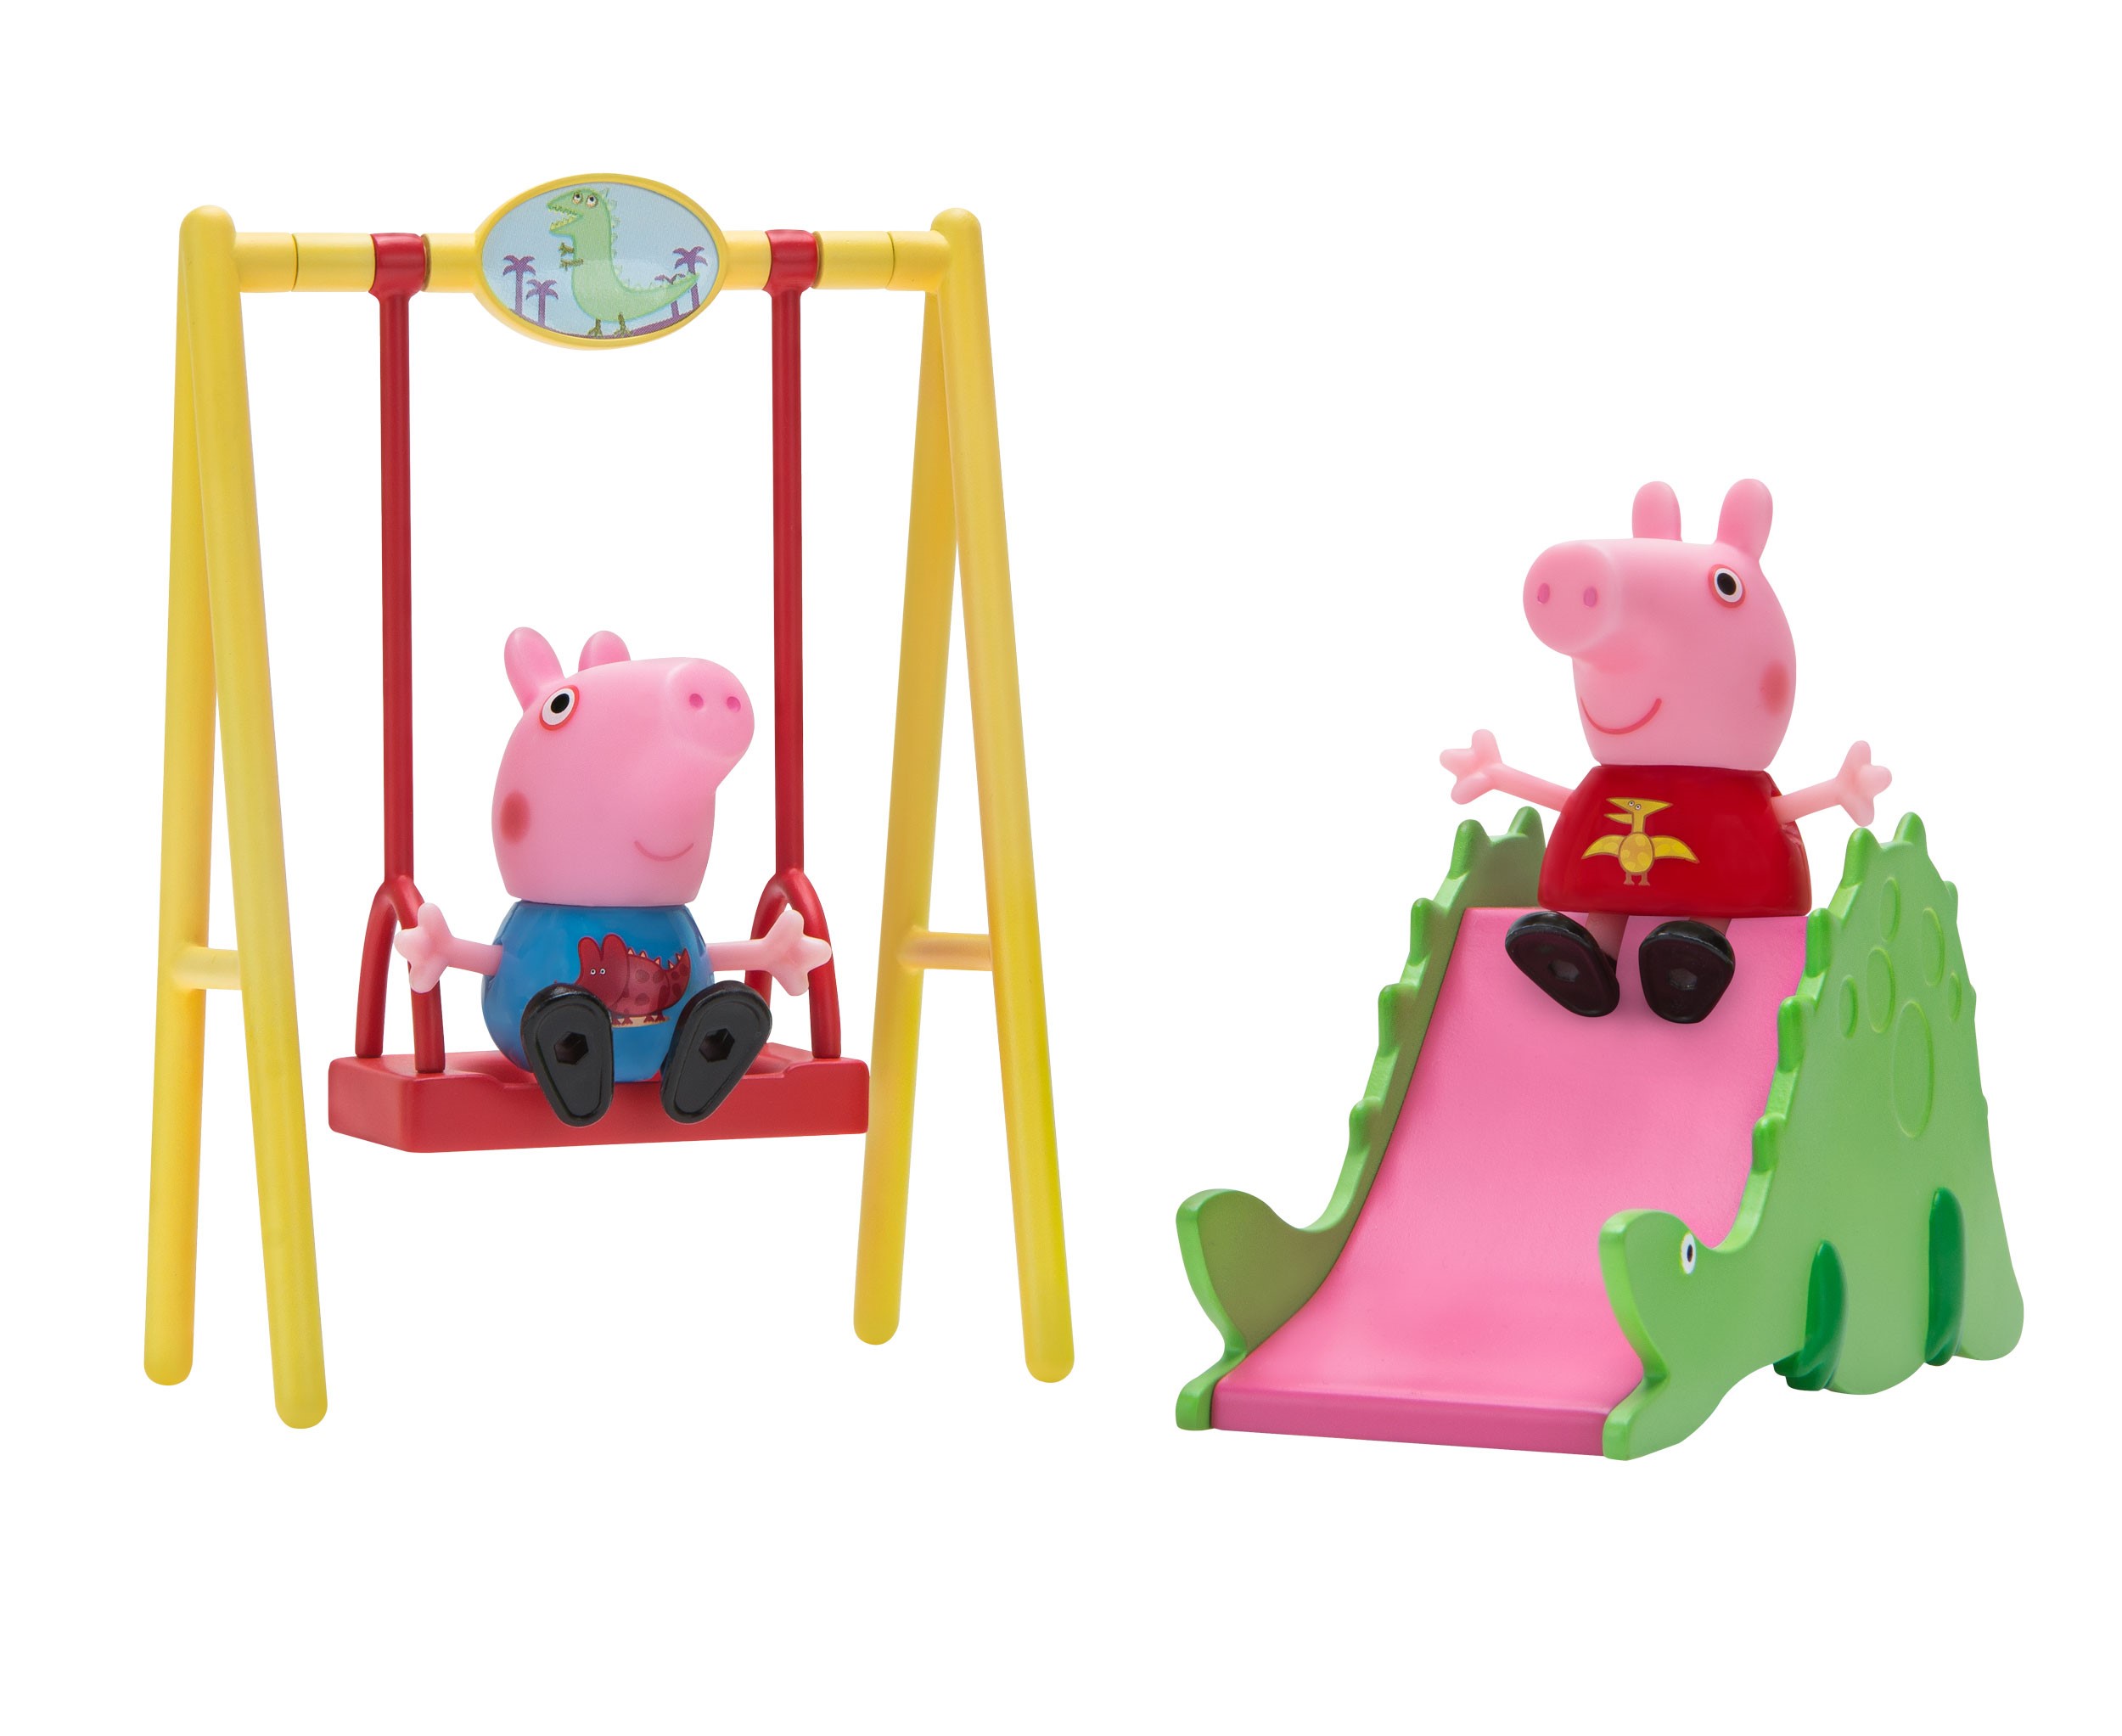 Peppa Pig 97049 Dinosaur Park Play Set - image 2 of 3